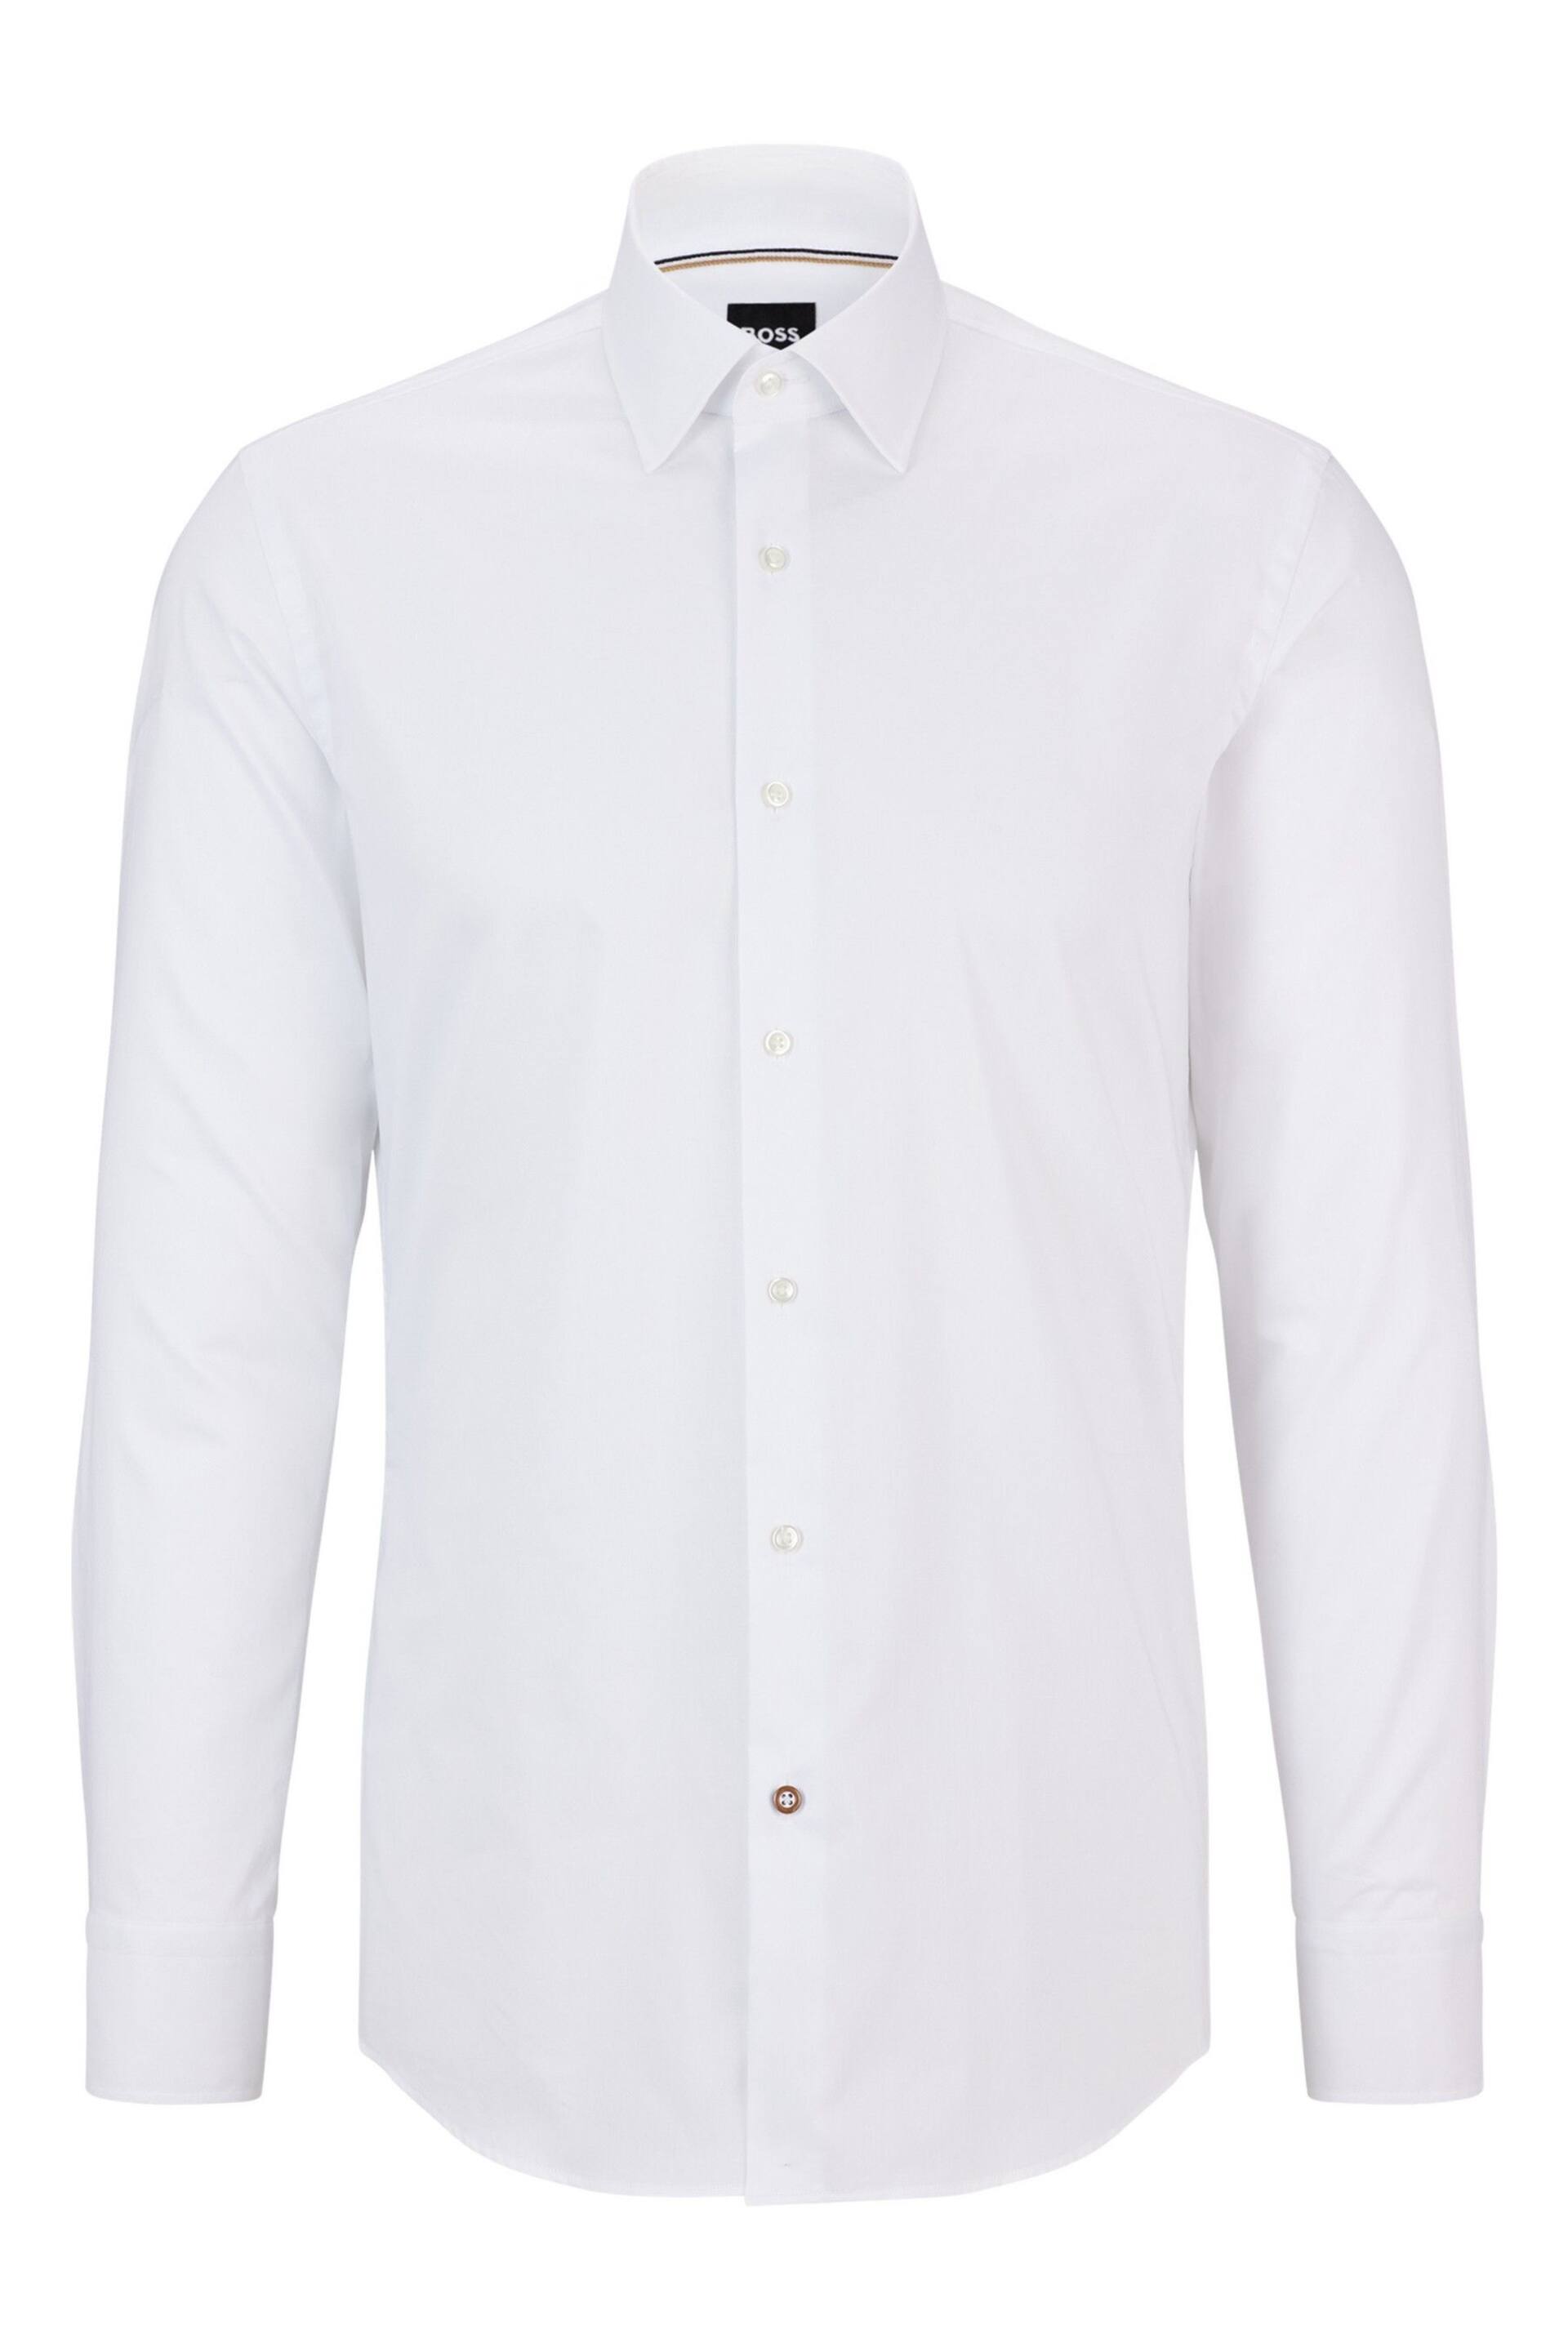 BOSS White Slim Fit Dress Shirt - Image 6 of 6